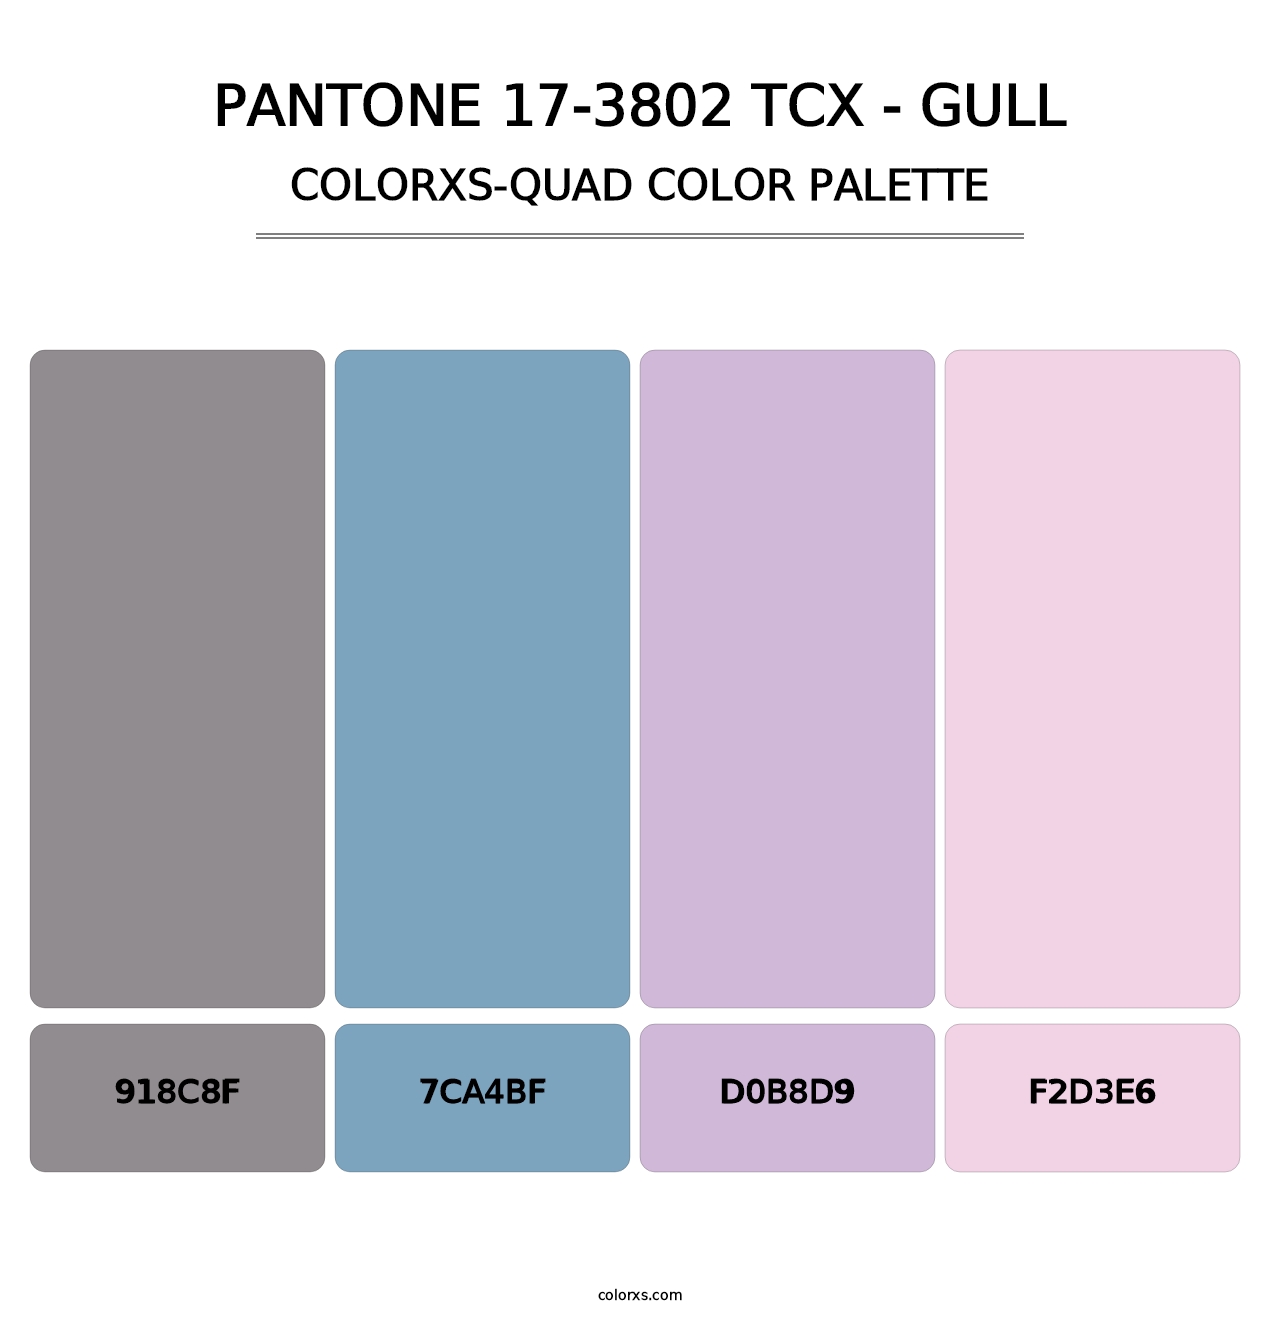 PANTONE 17-3802 TCX - Gull - Colorxs Quad Palette